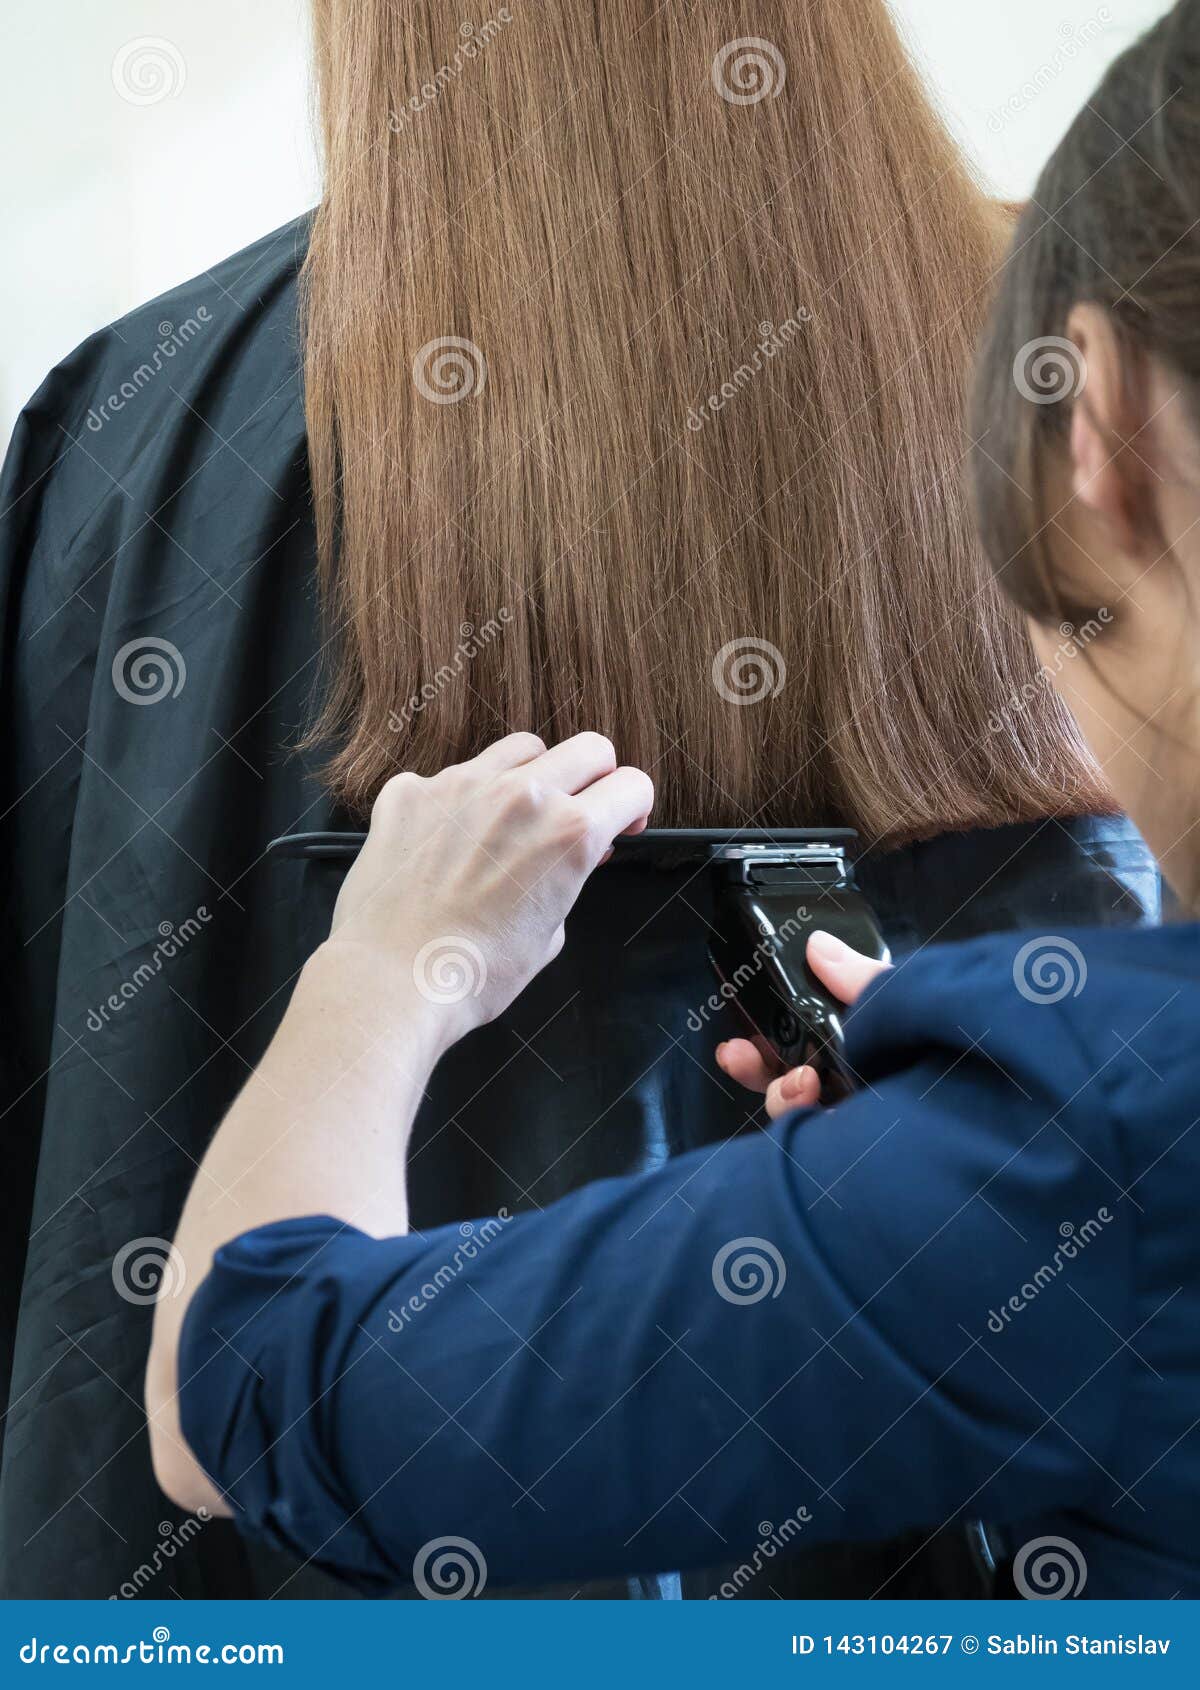 Haircut Long Hair Machine Alignment Length Hair Stock Image  Image of  occupation customer 143104267